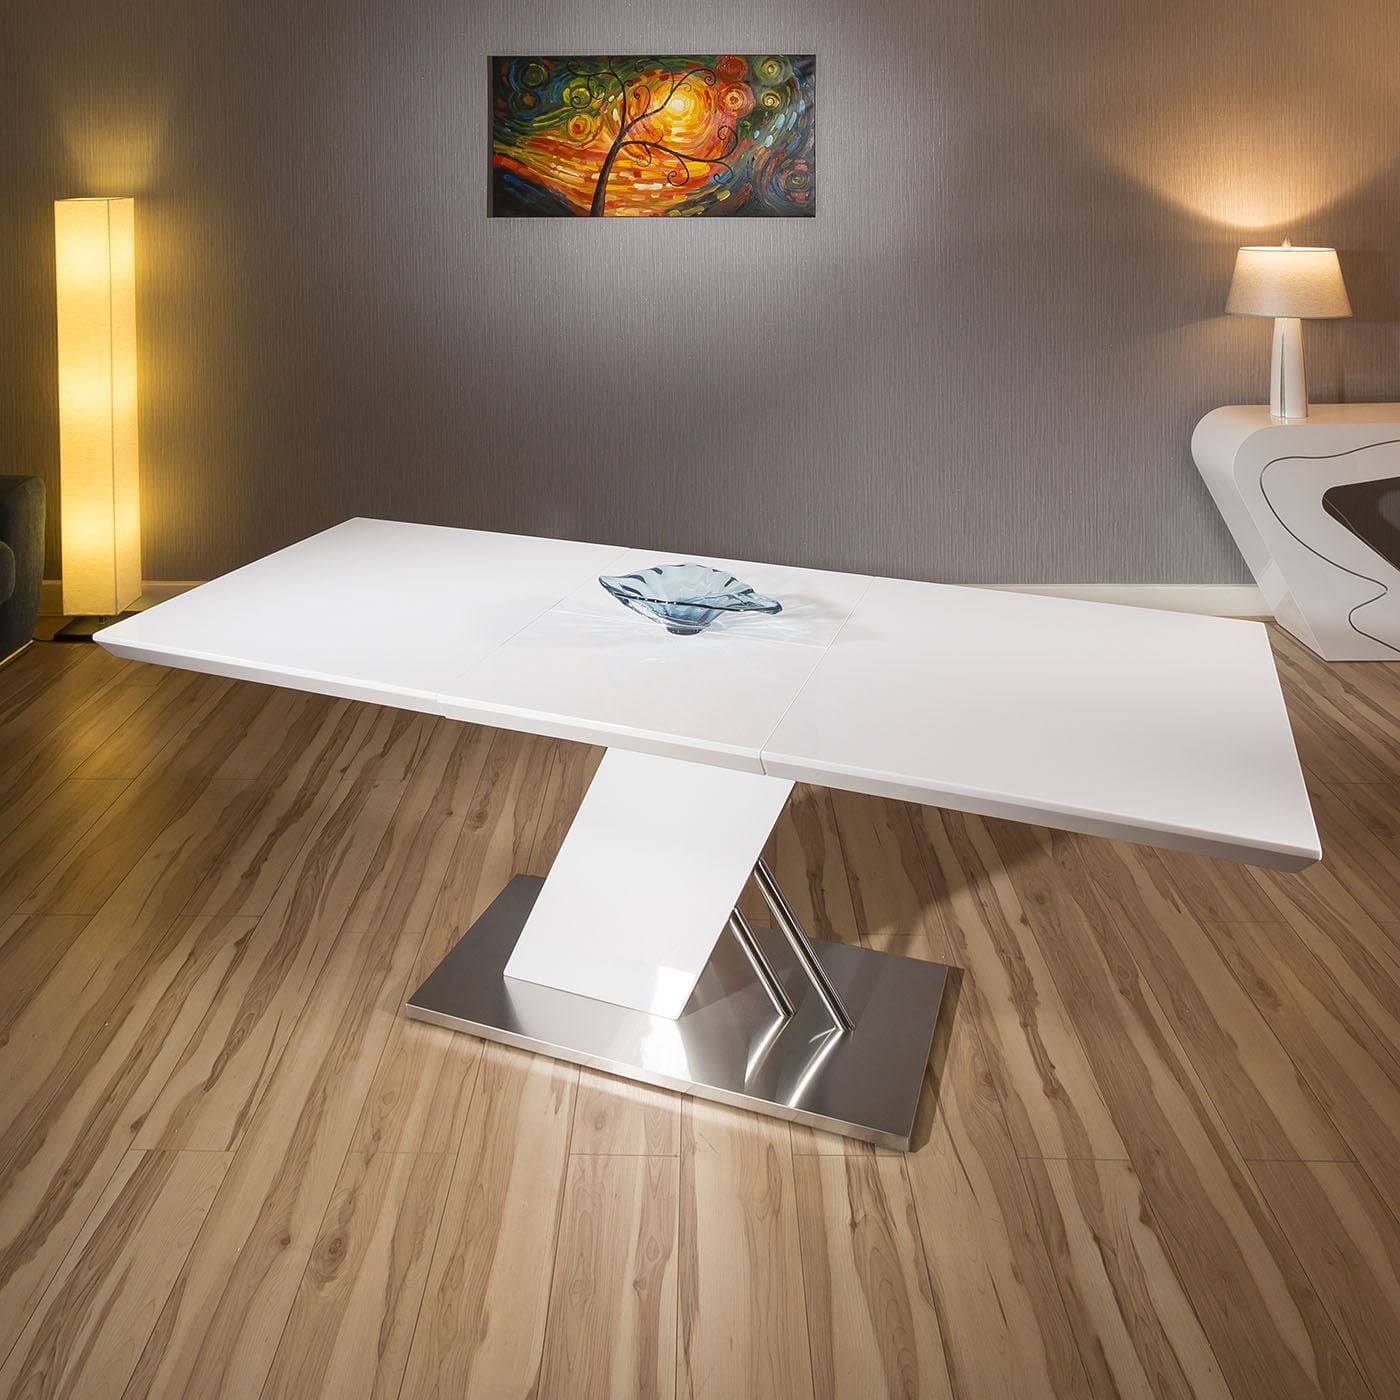 Quatropi Modern Extending Dining Table White Gloss Colour 160 - 220cm top